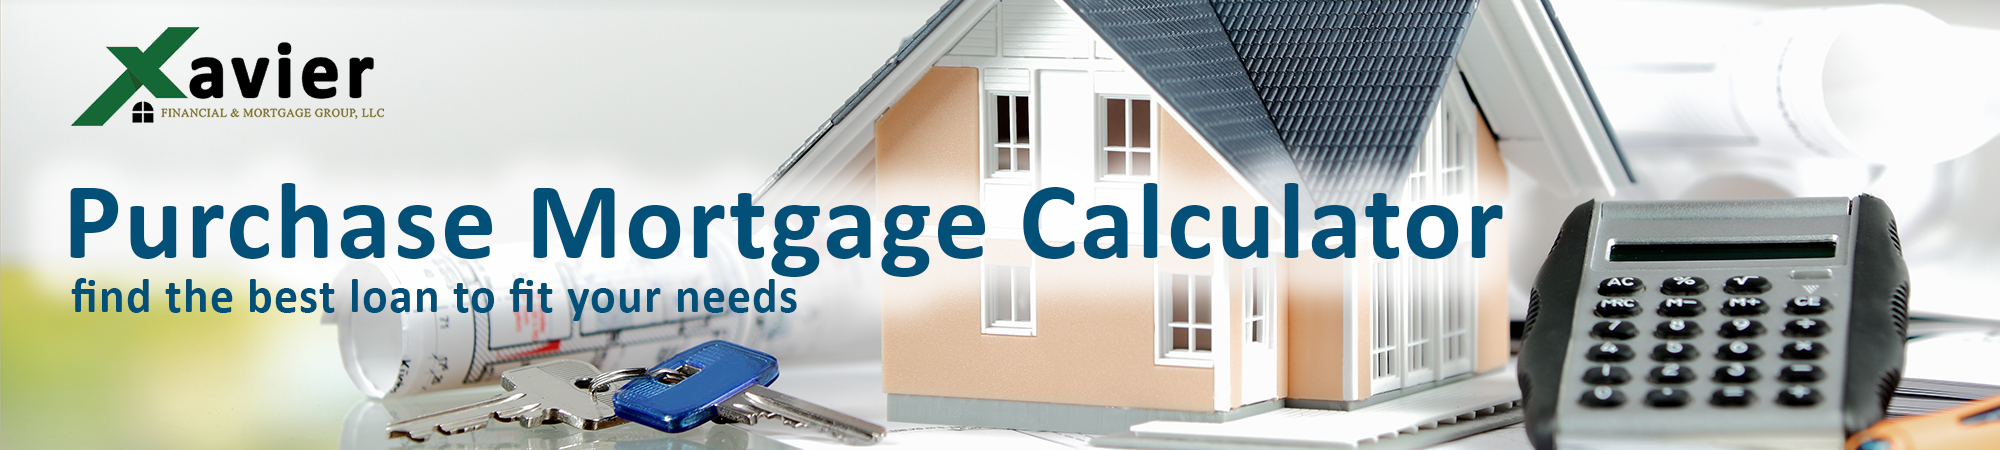 Purchase Mortgage Calculator